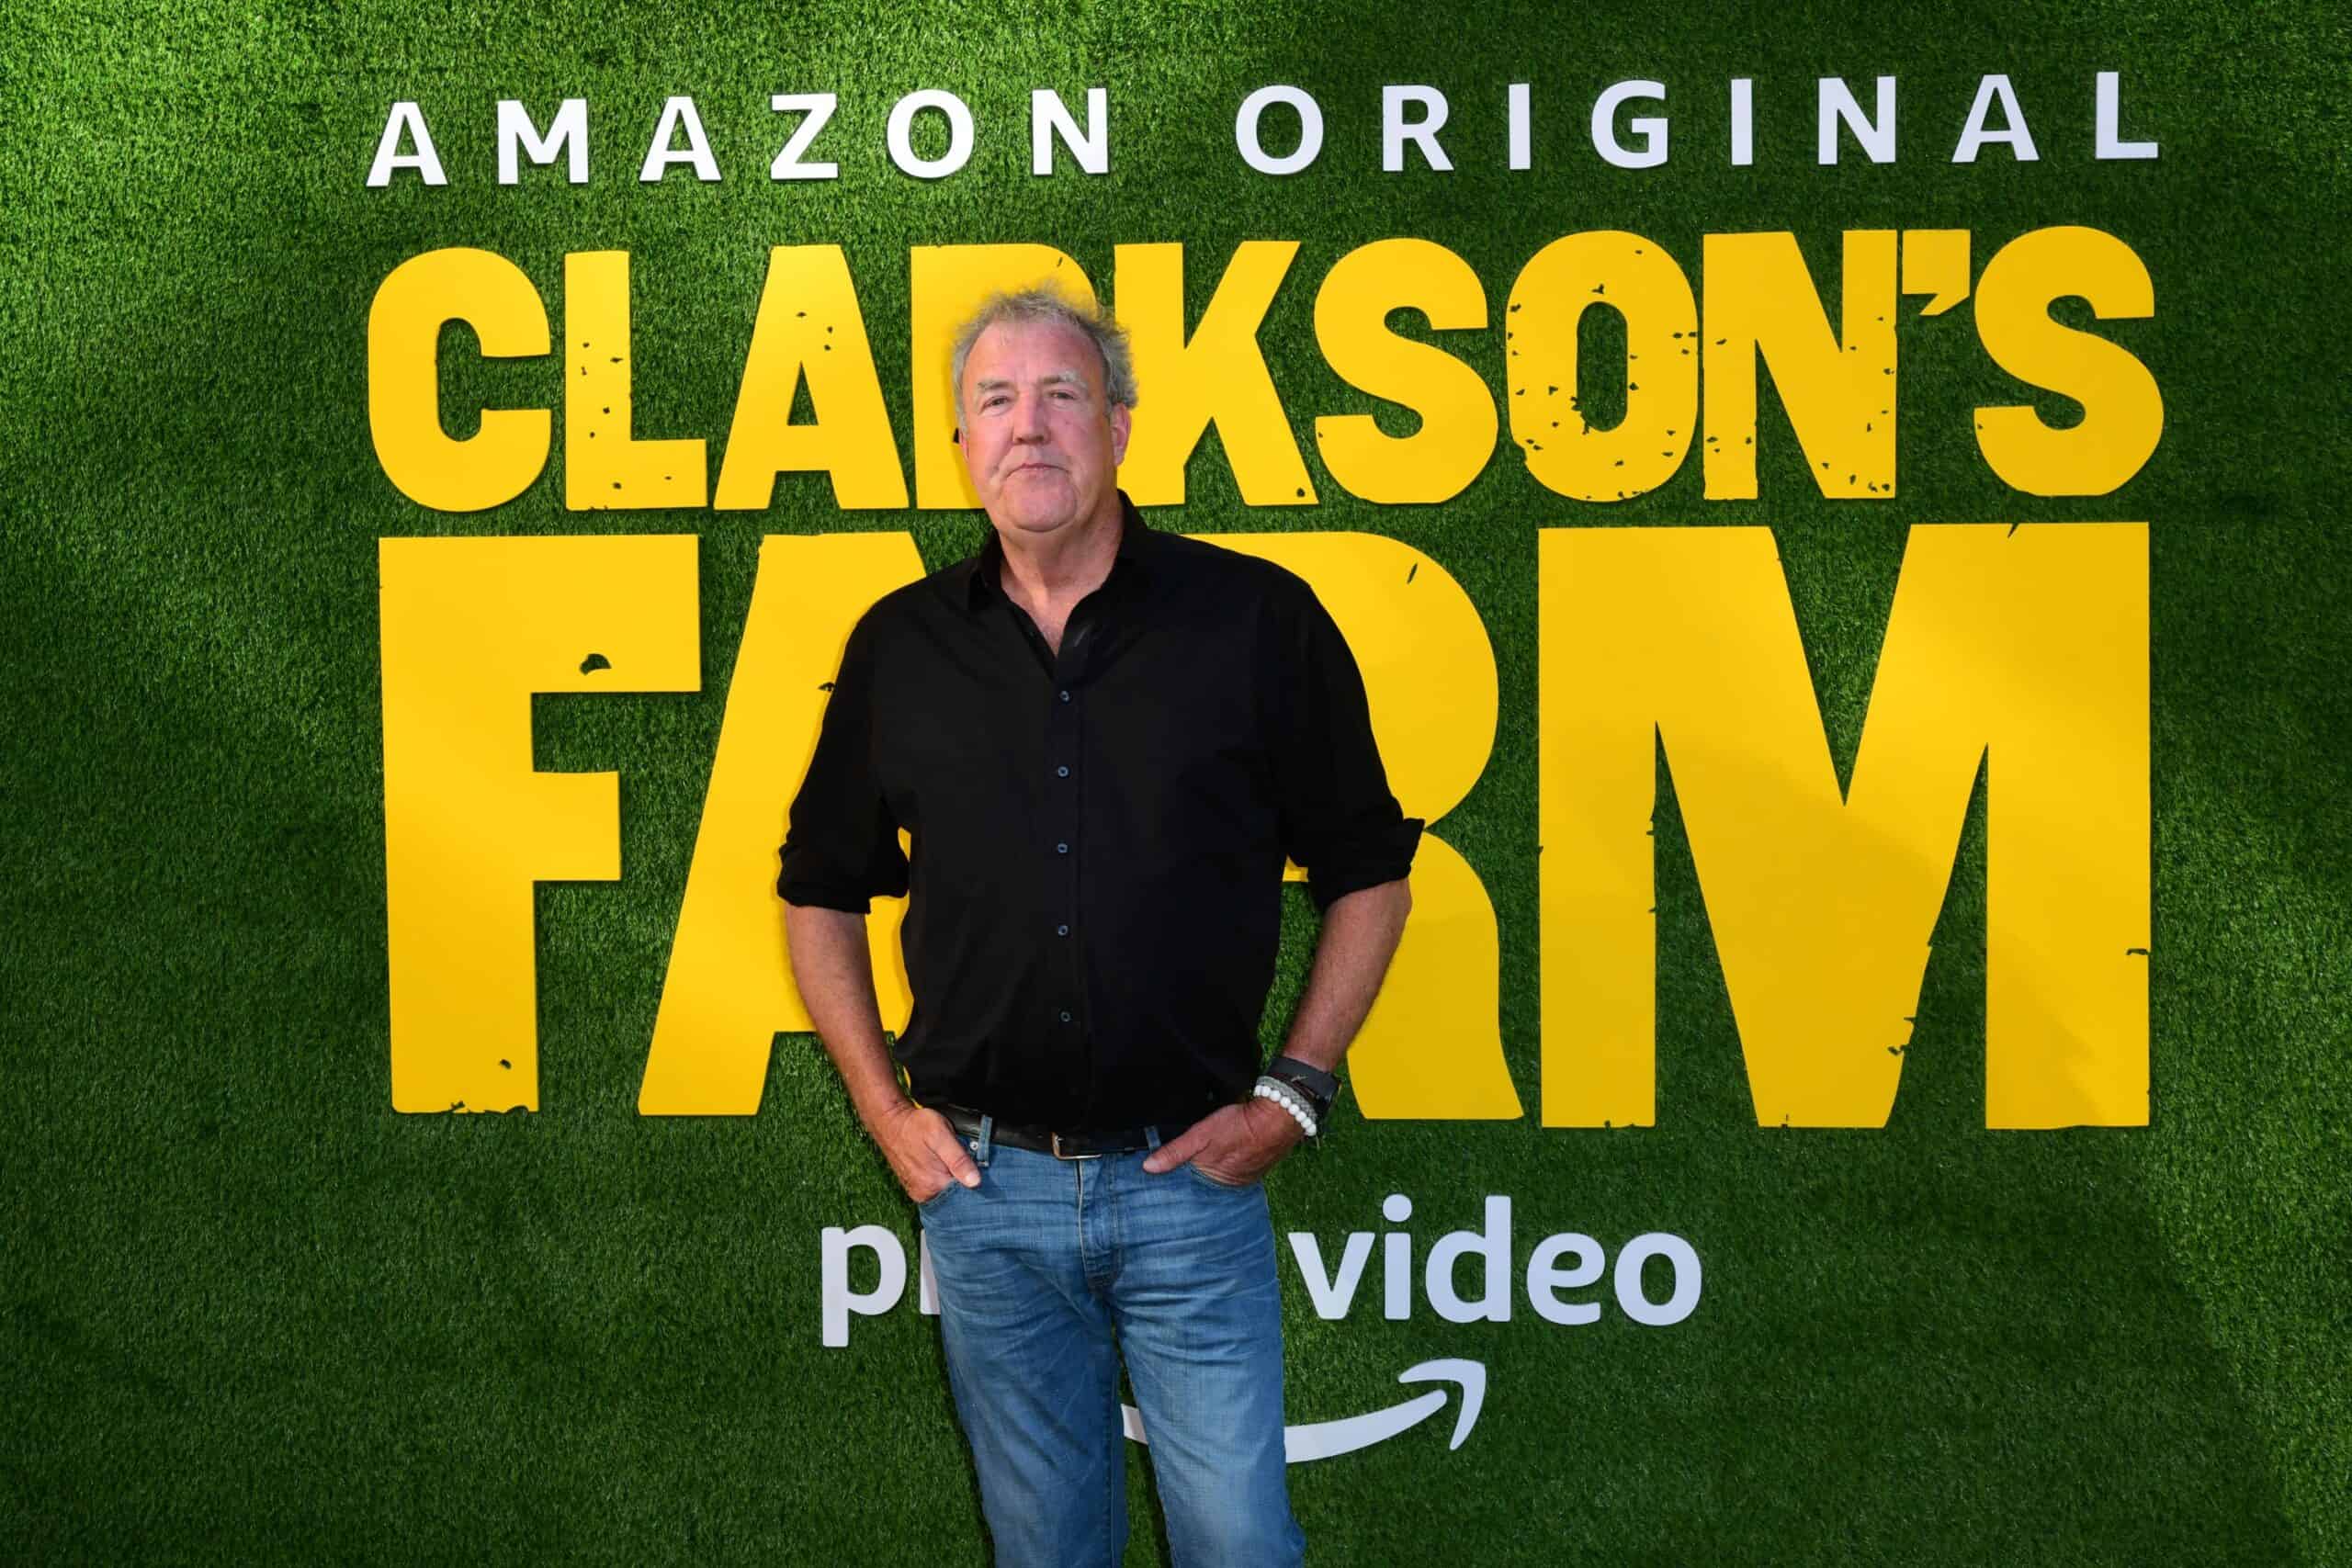 Amazon parts ways with Jeremy Clarkson after Meghan Markle column